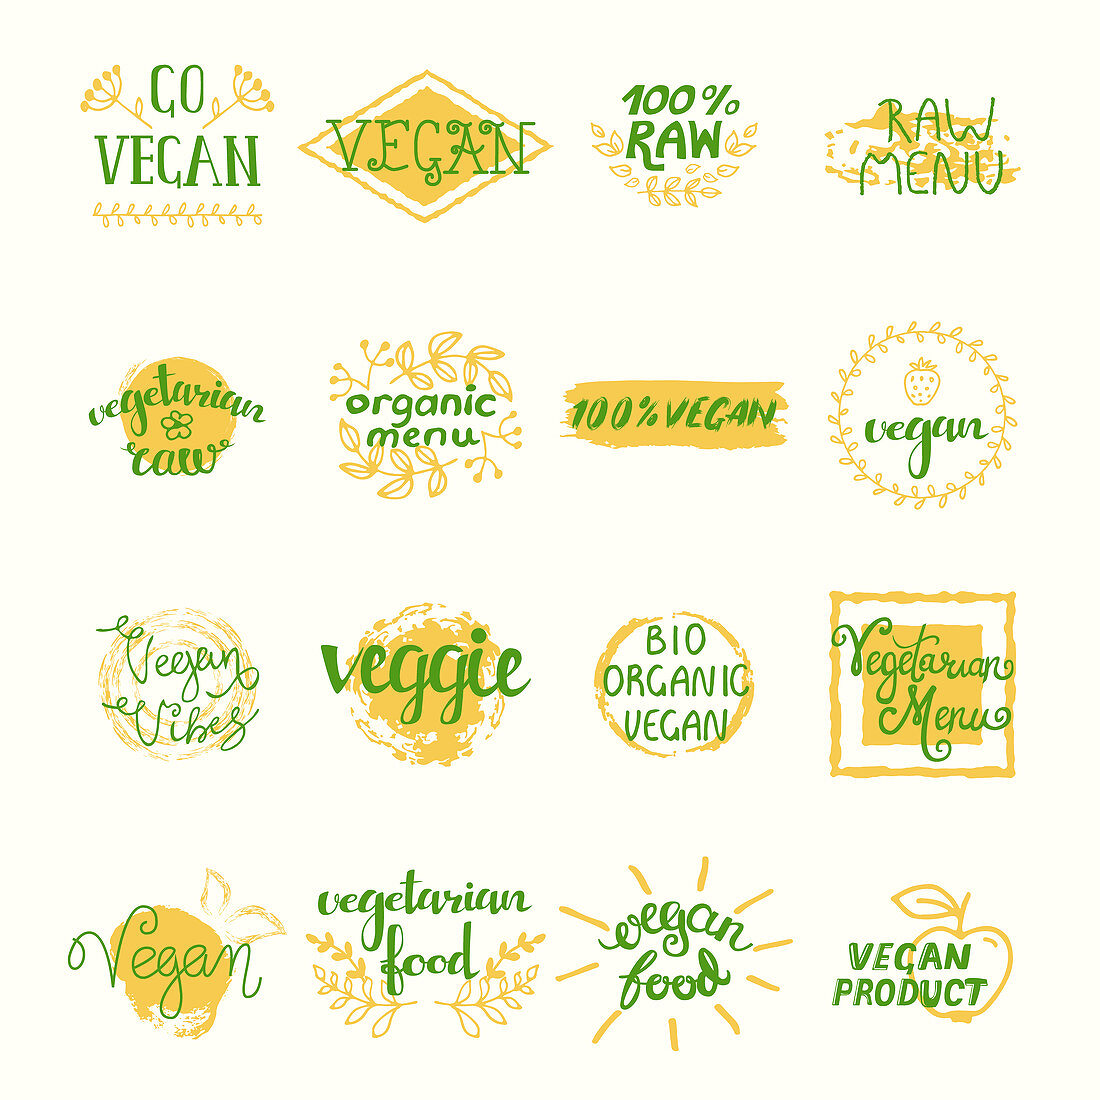 Vegan icons, illustration